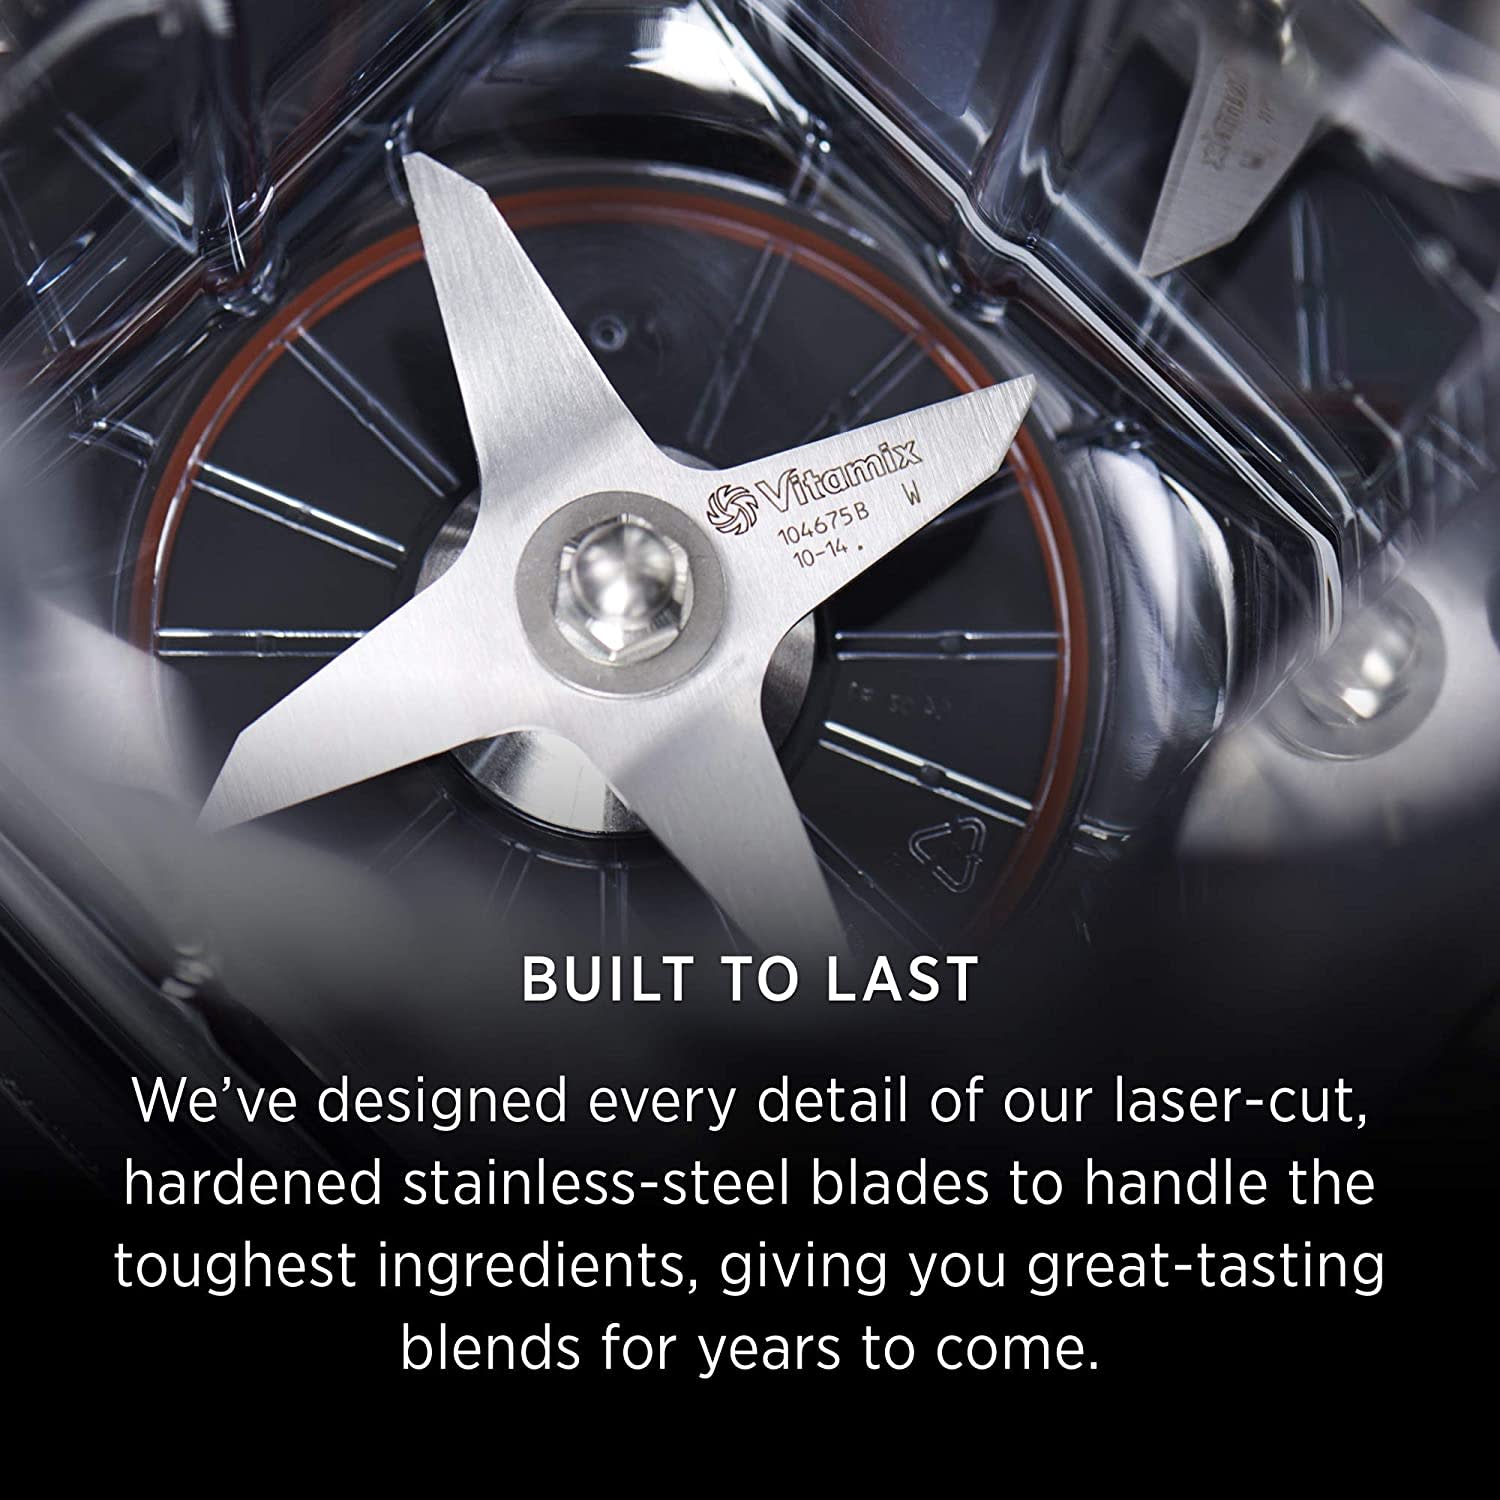 Vitamix A3500 Ascent stainless steel blender 